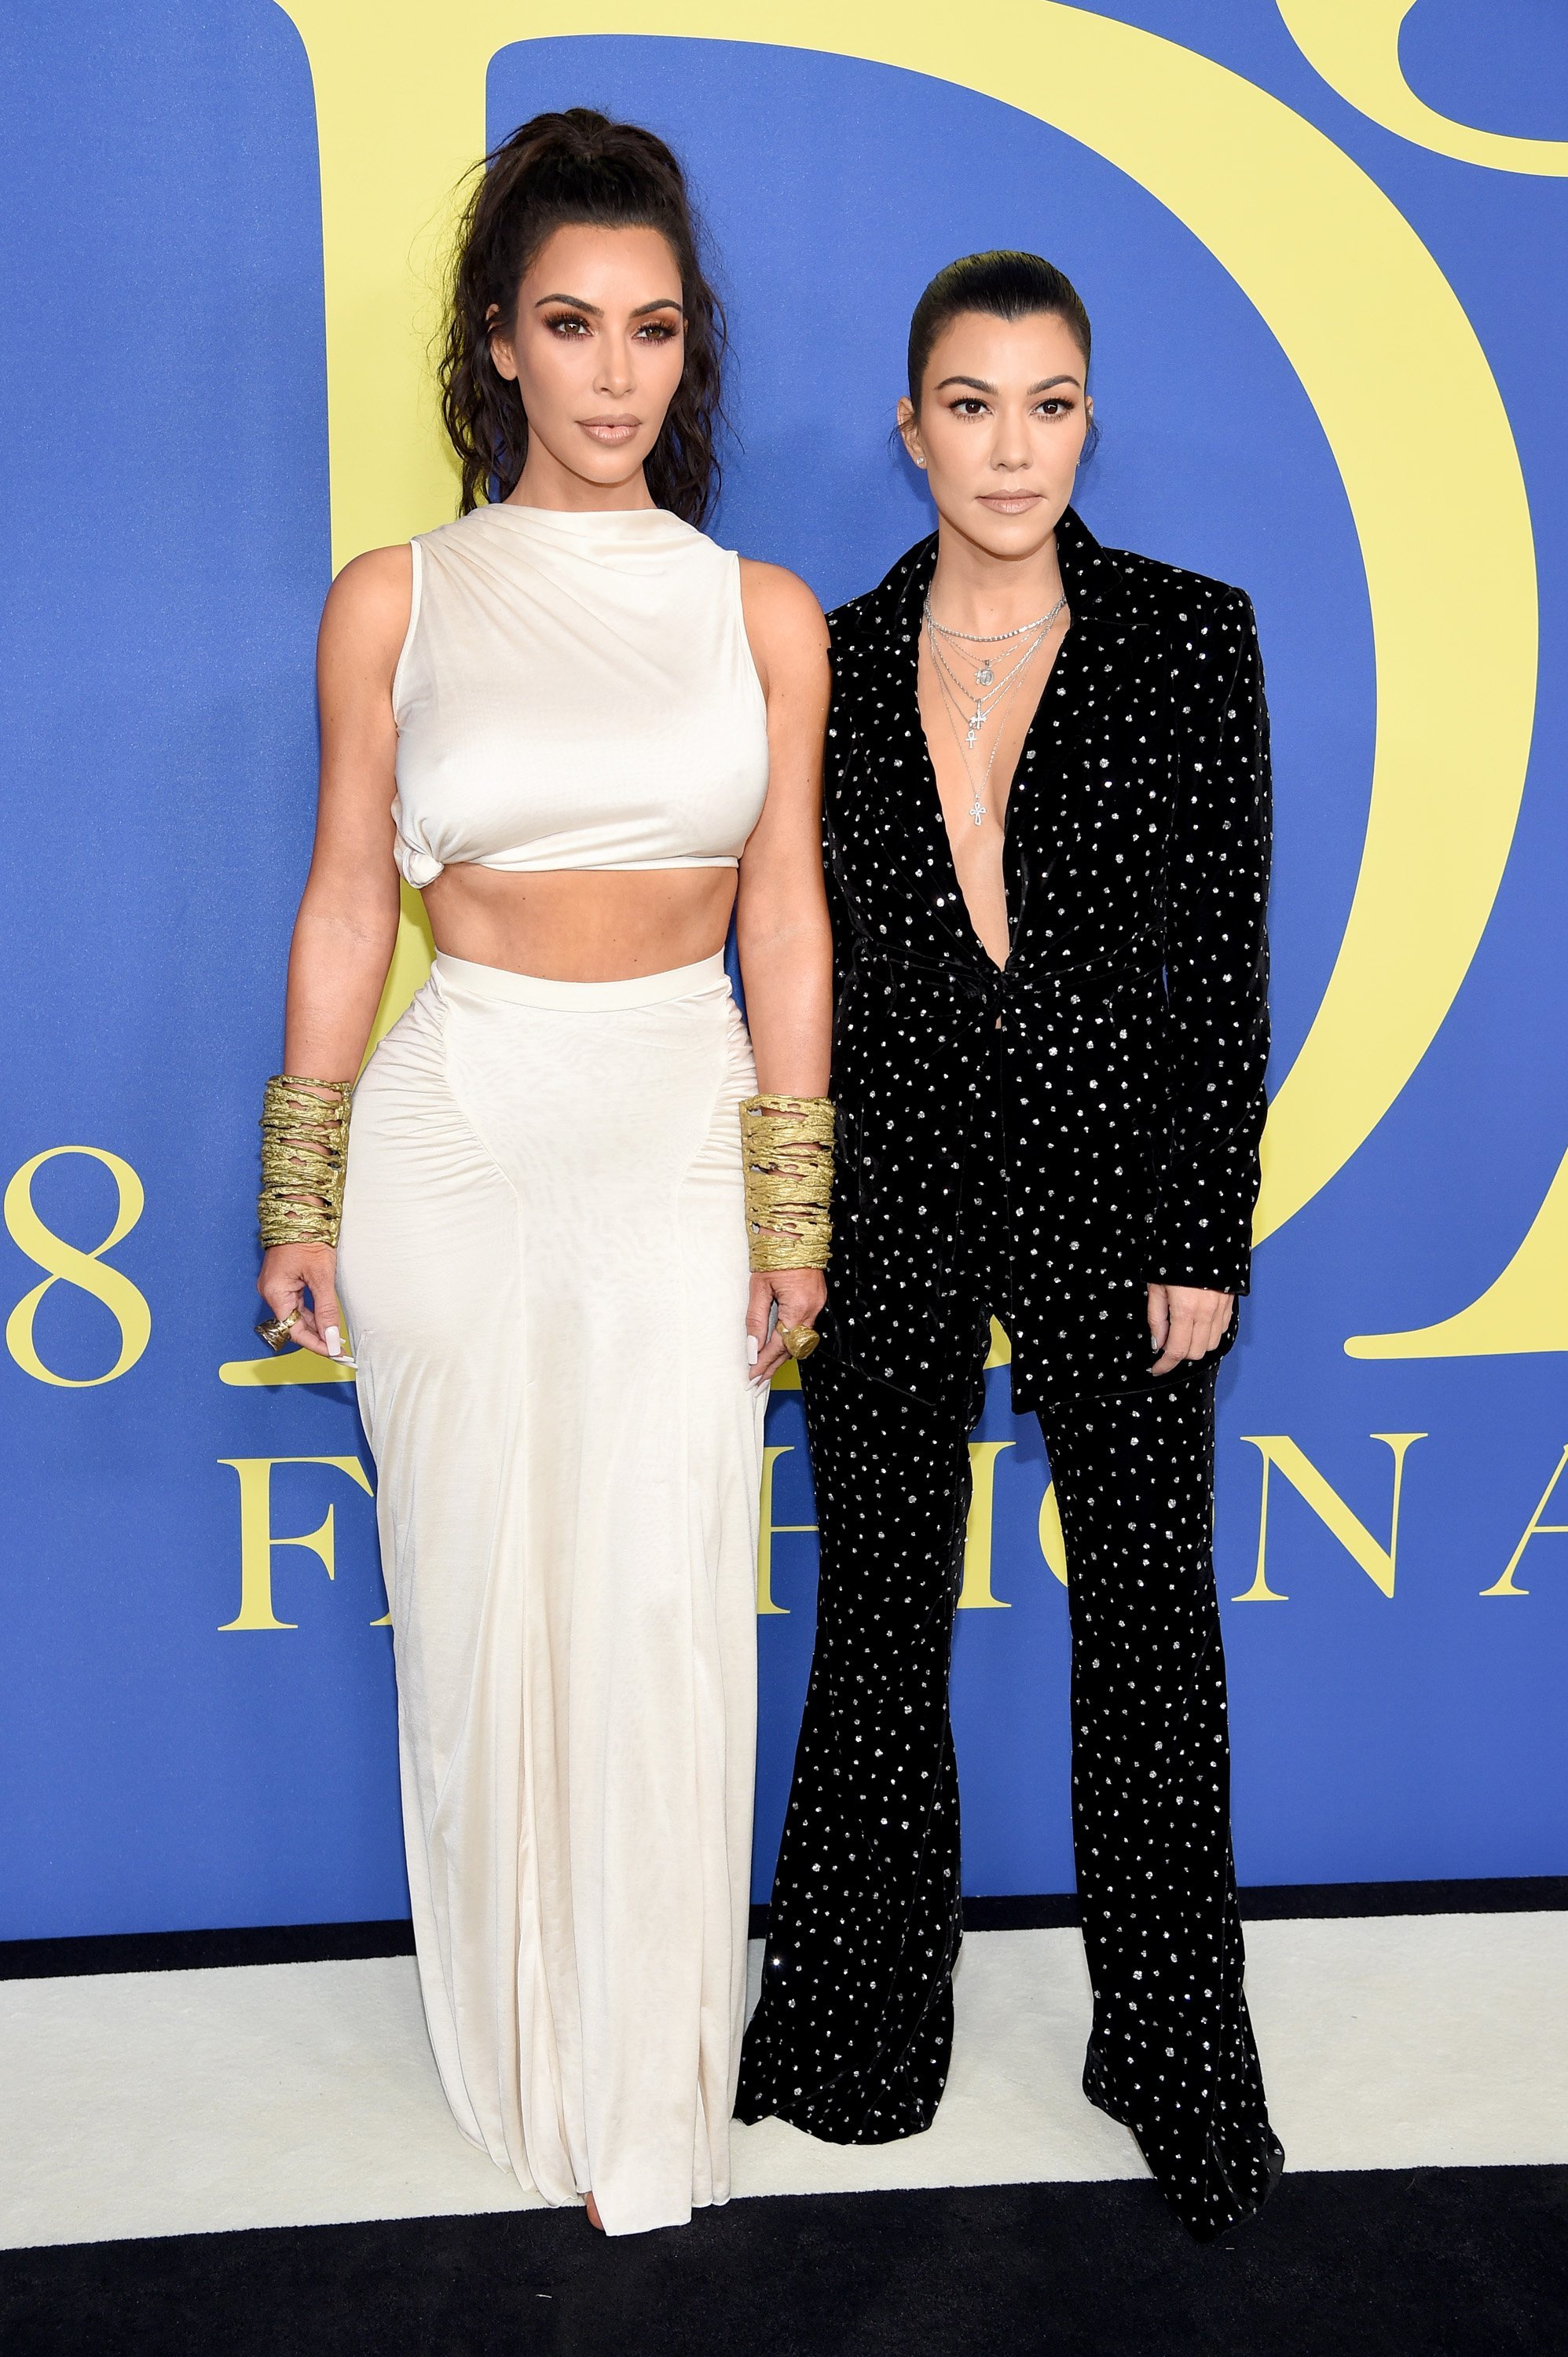 Kim Kardashian West and Kourtney Kardashian attend the 2018 CFDA Fashion Awards on June 4, 2018 in New York City. | Source: Getty Images.